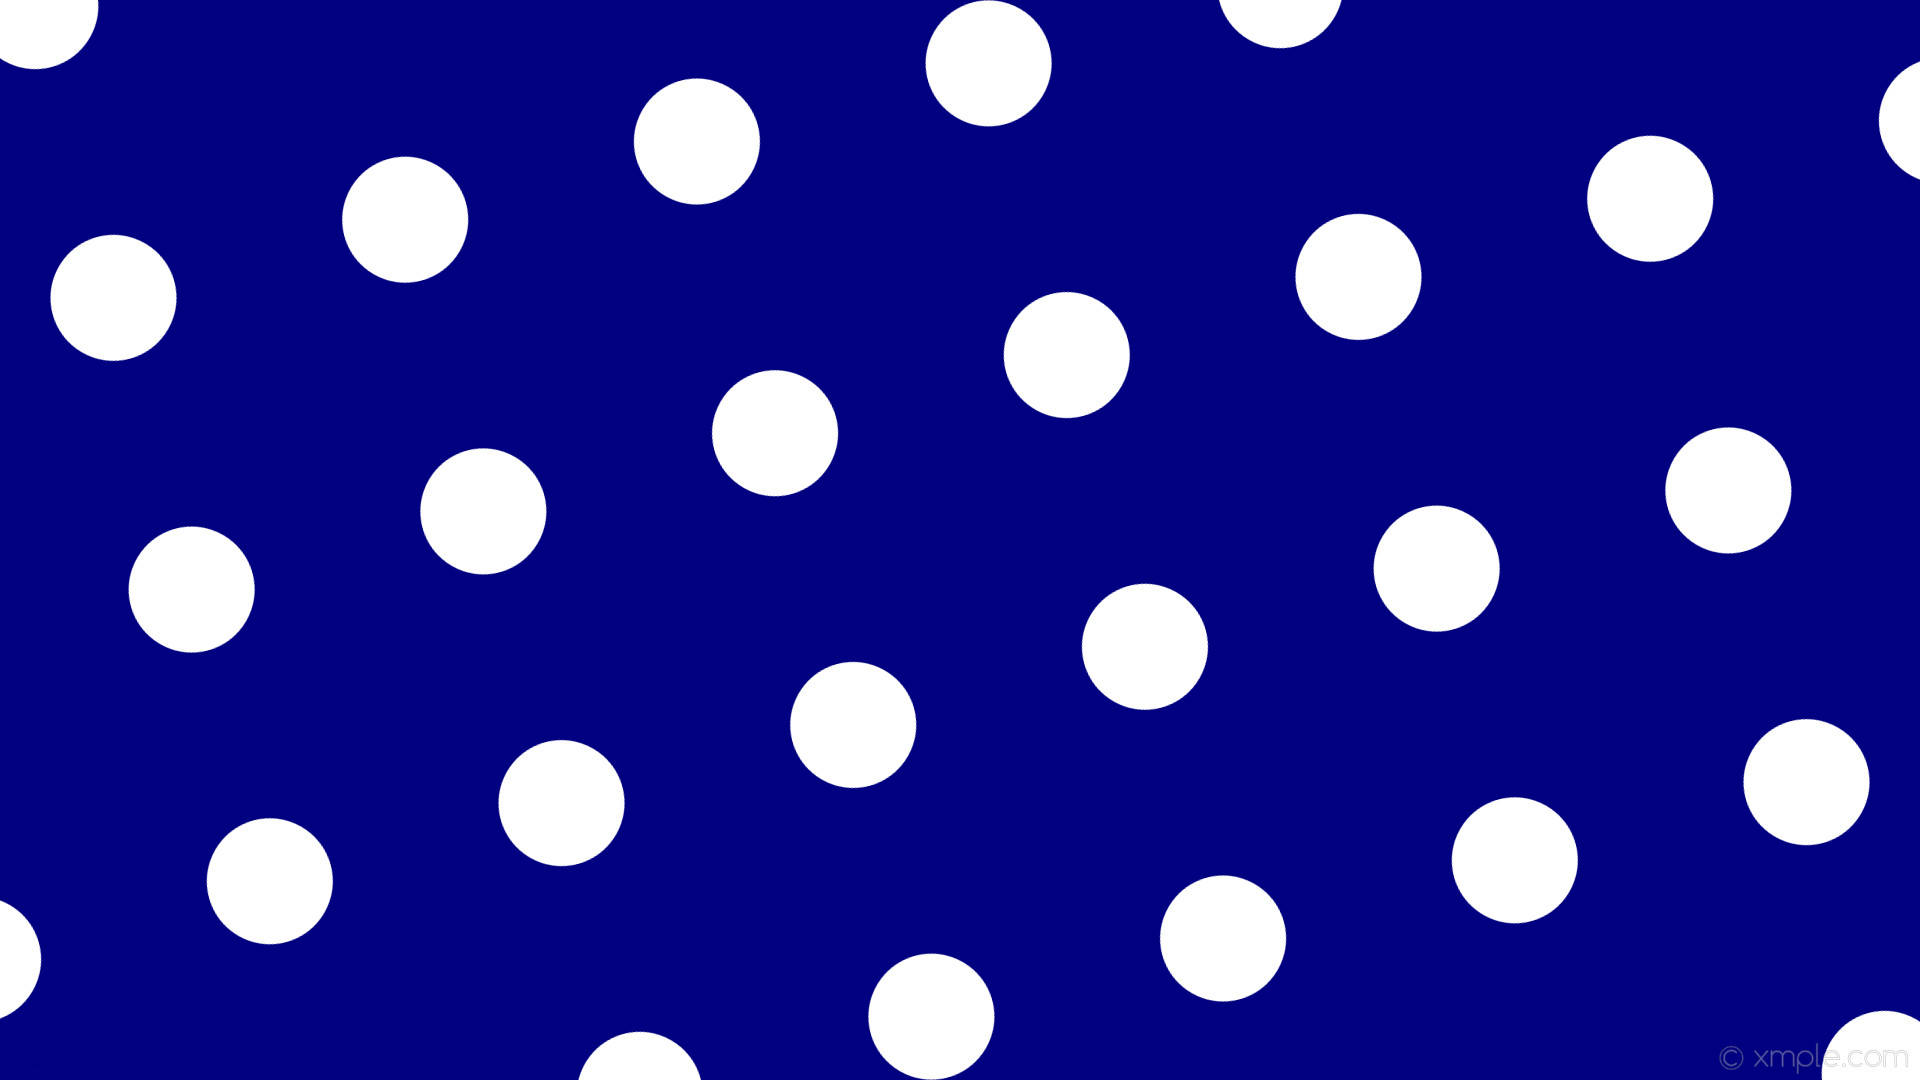 1920x1080 wallpaper spots blue white polka dots navy #000080 #ffffff 195Â° 126px 302px